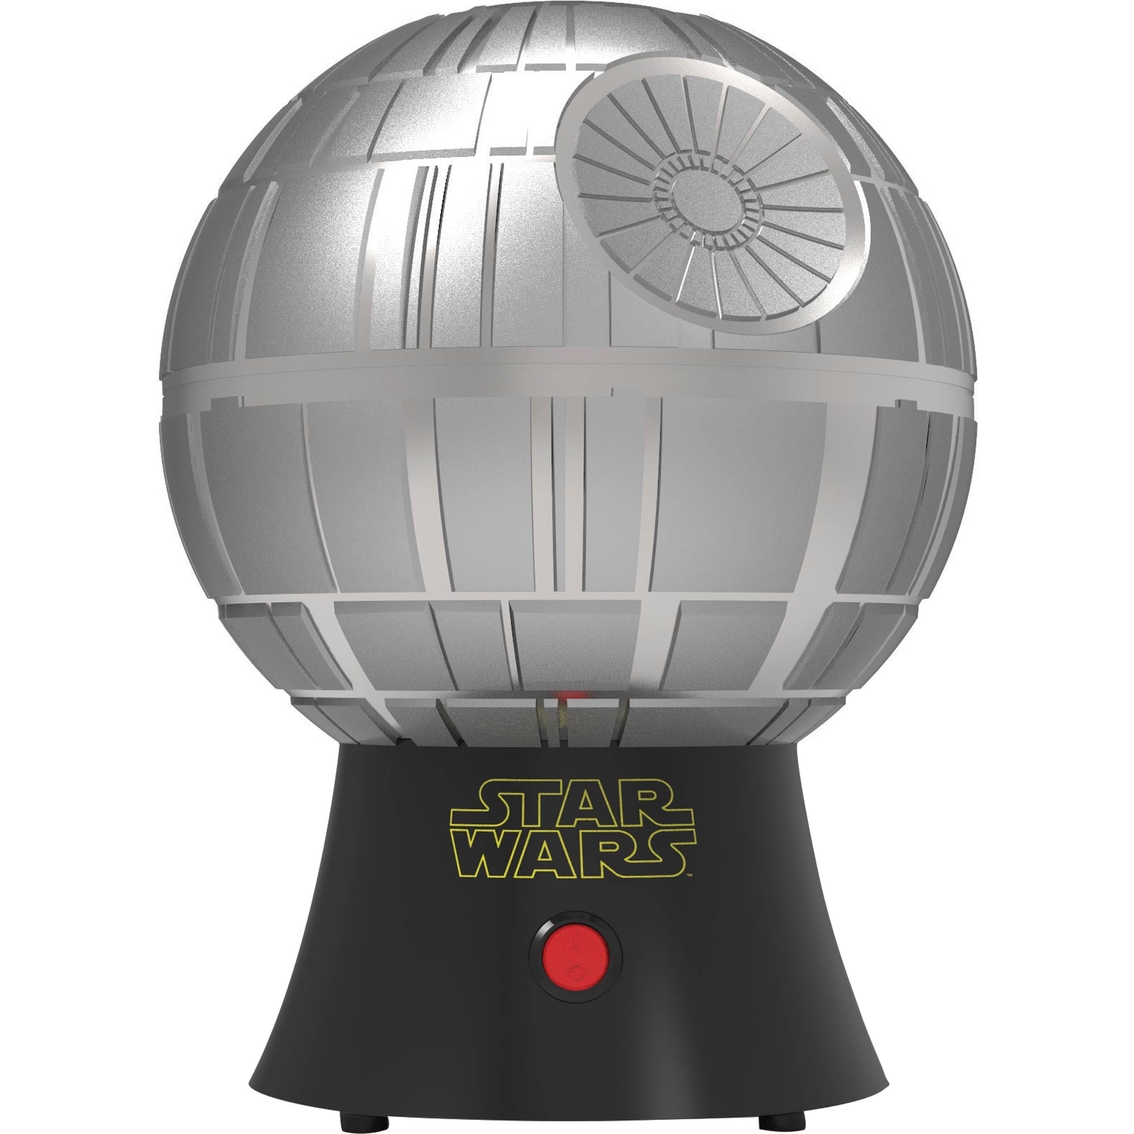 Star Wars Death Star Hot Air Popcorn Maker - Image 1 of 4